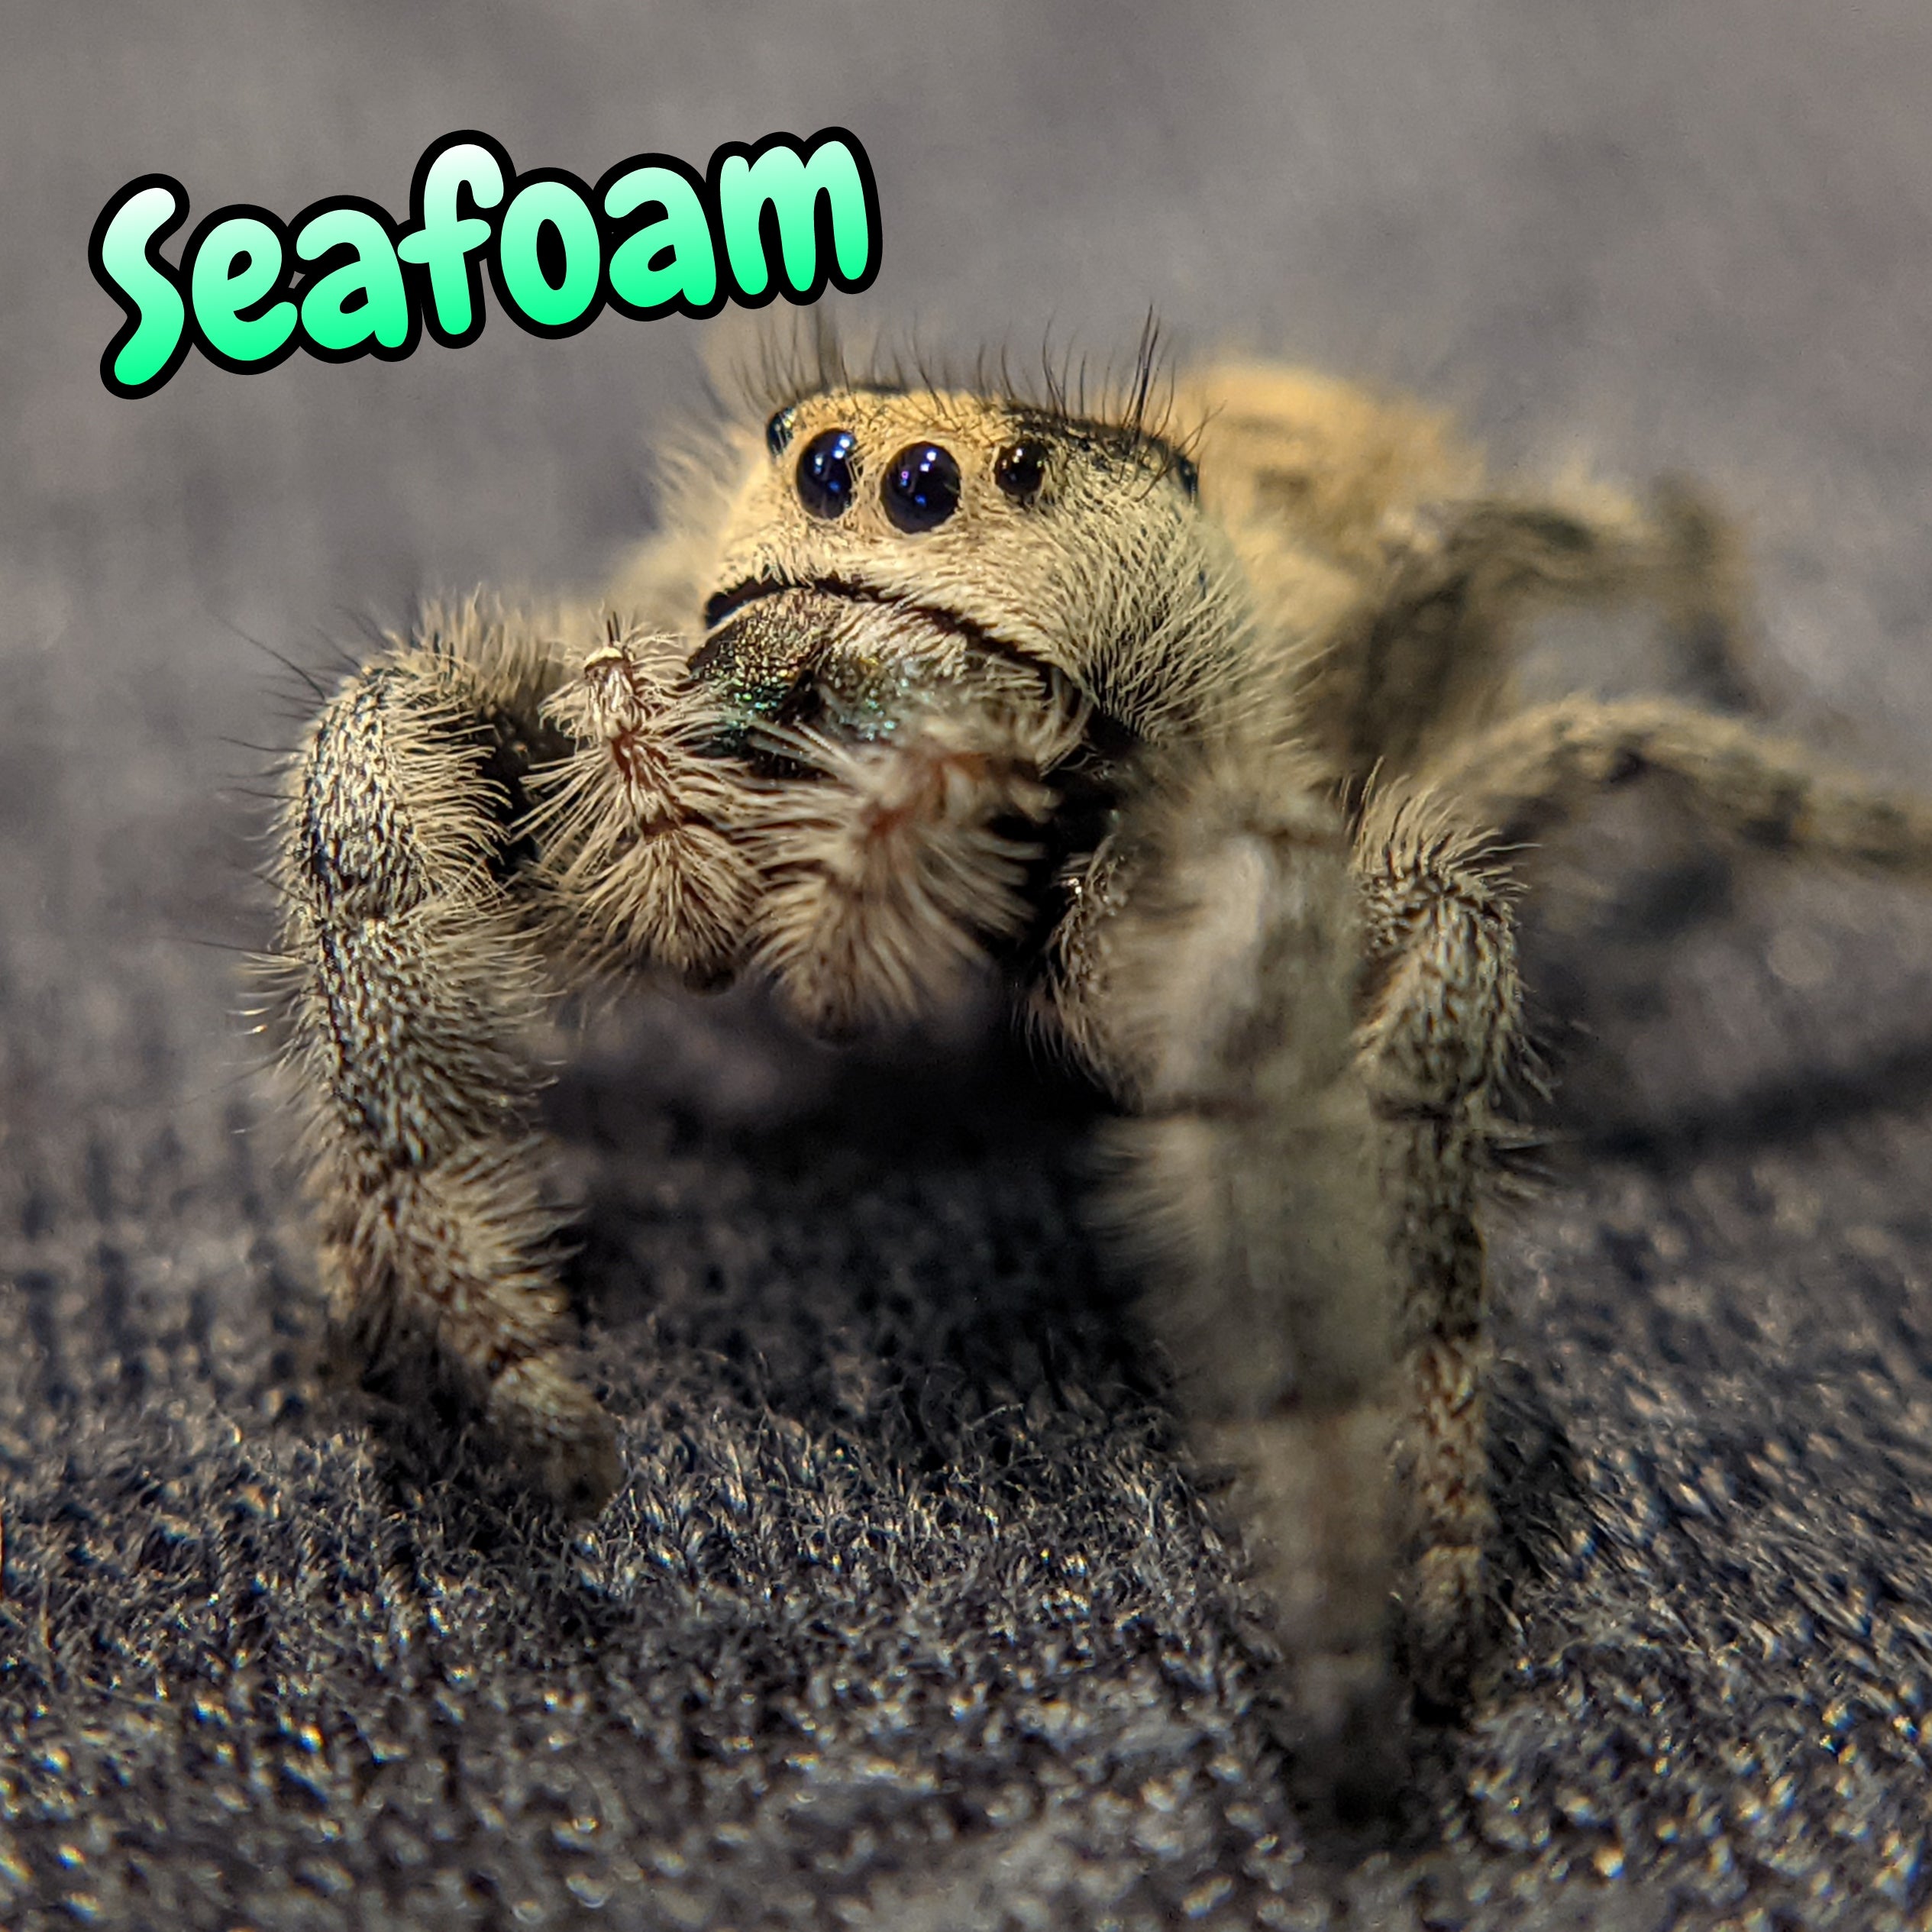 Regal Jumping Spider "Seafoam"